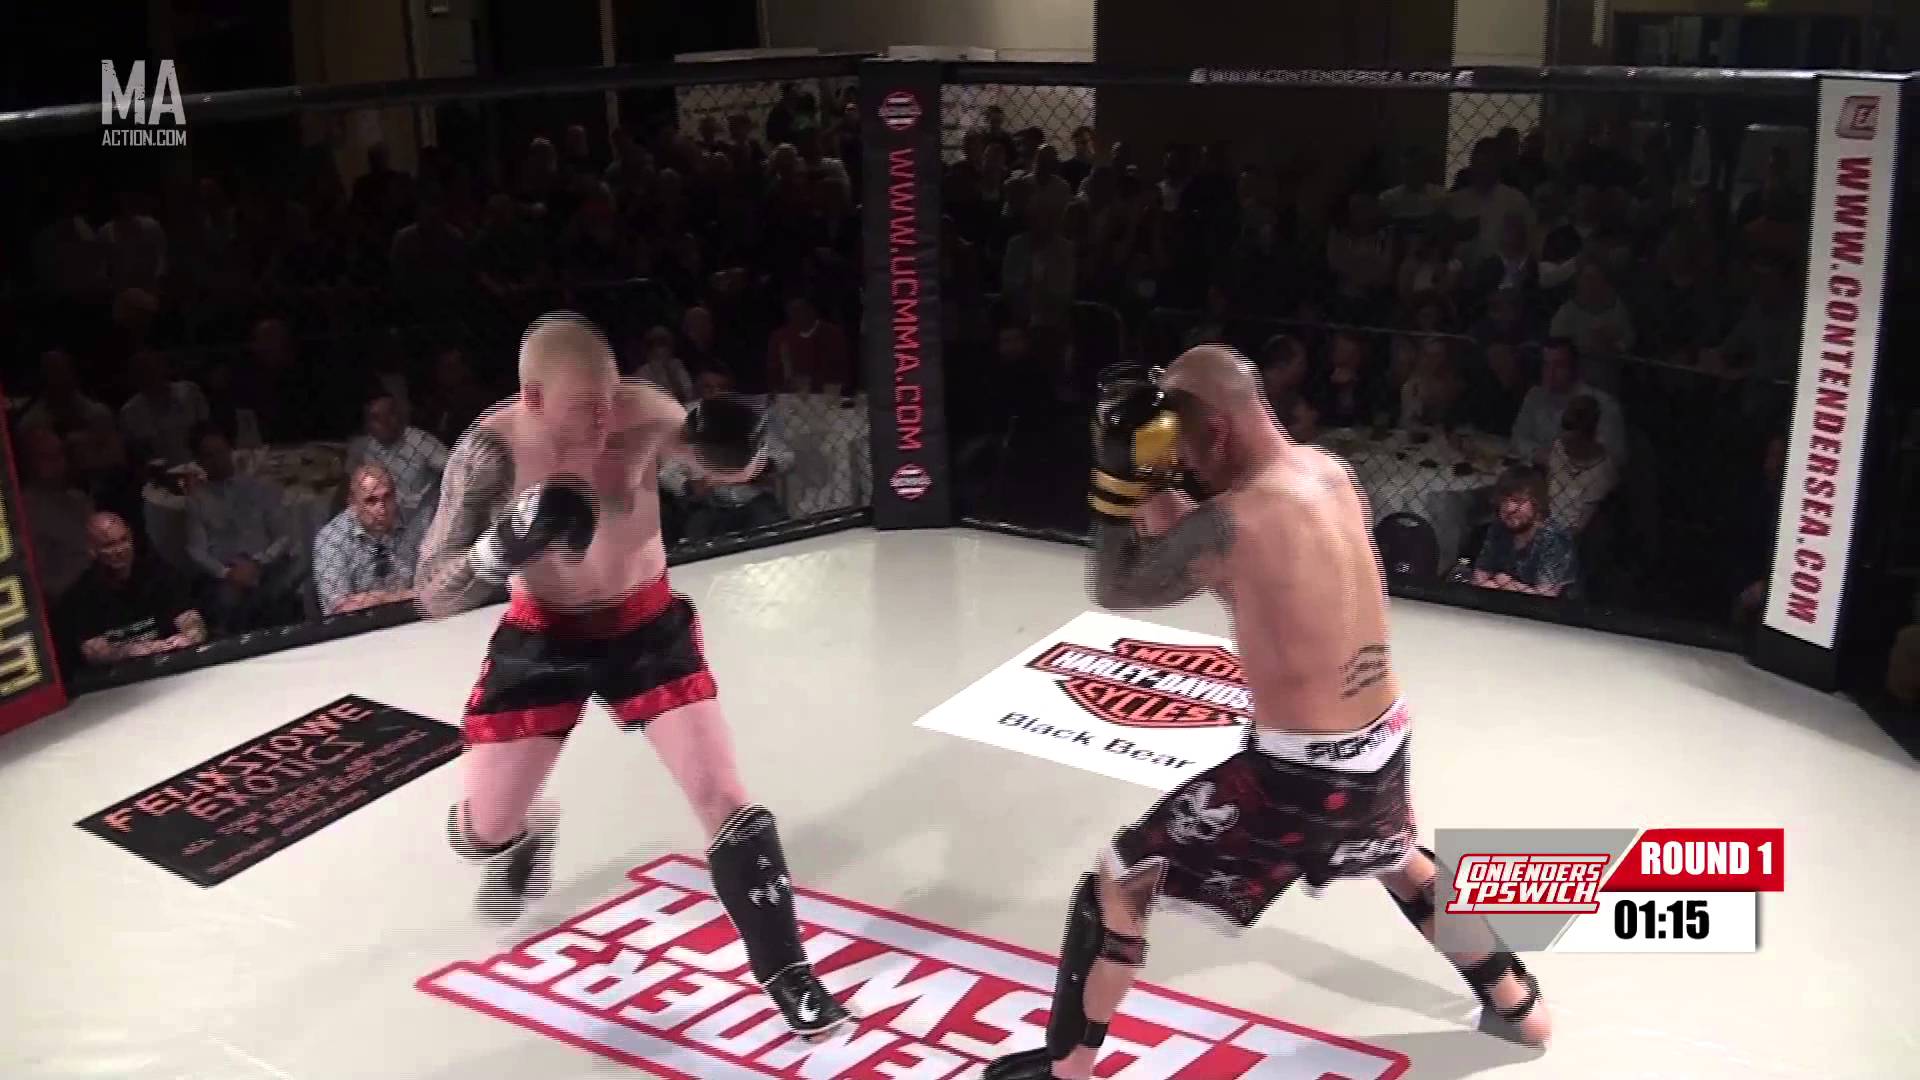 Tom Whitton vs Matt Bone - Contenders Ipswich #1 Full Fight MMA Video1920 x 1080